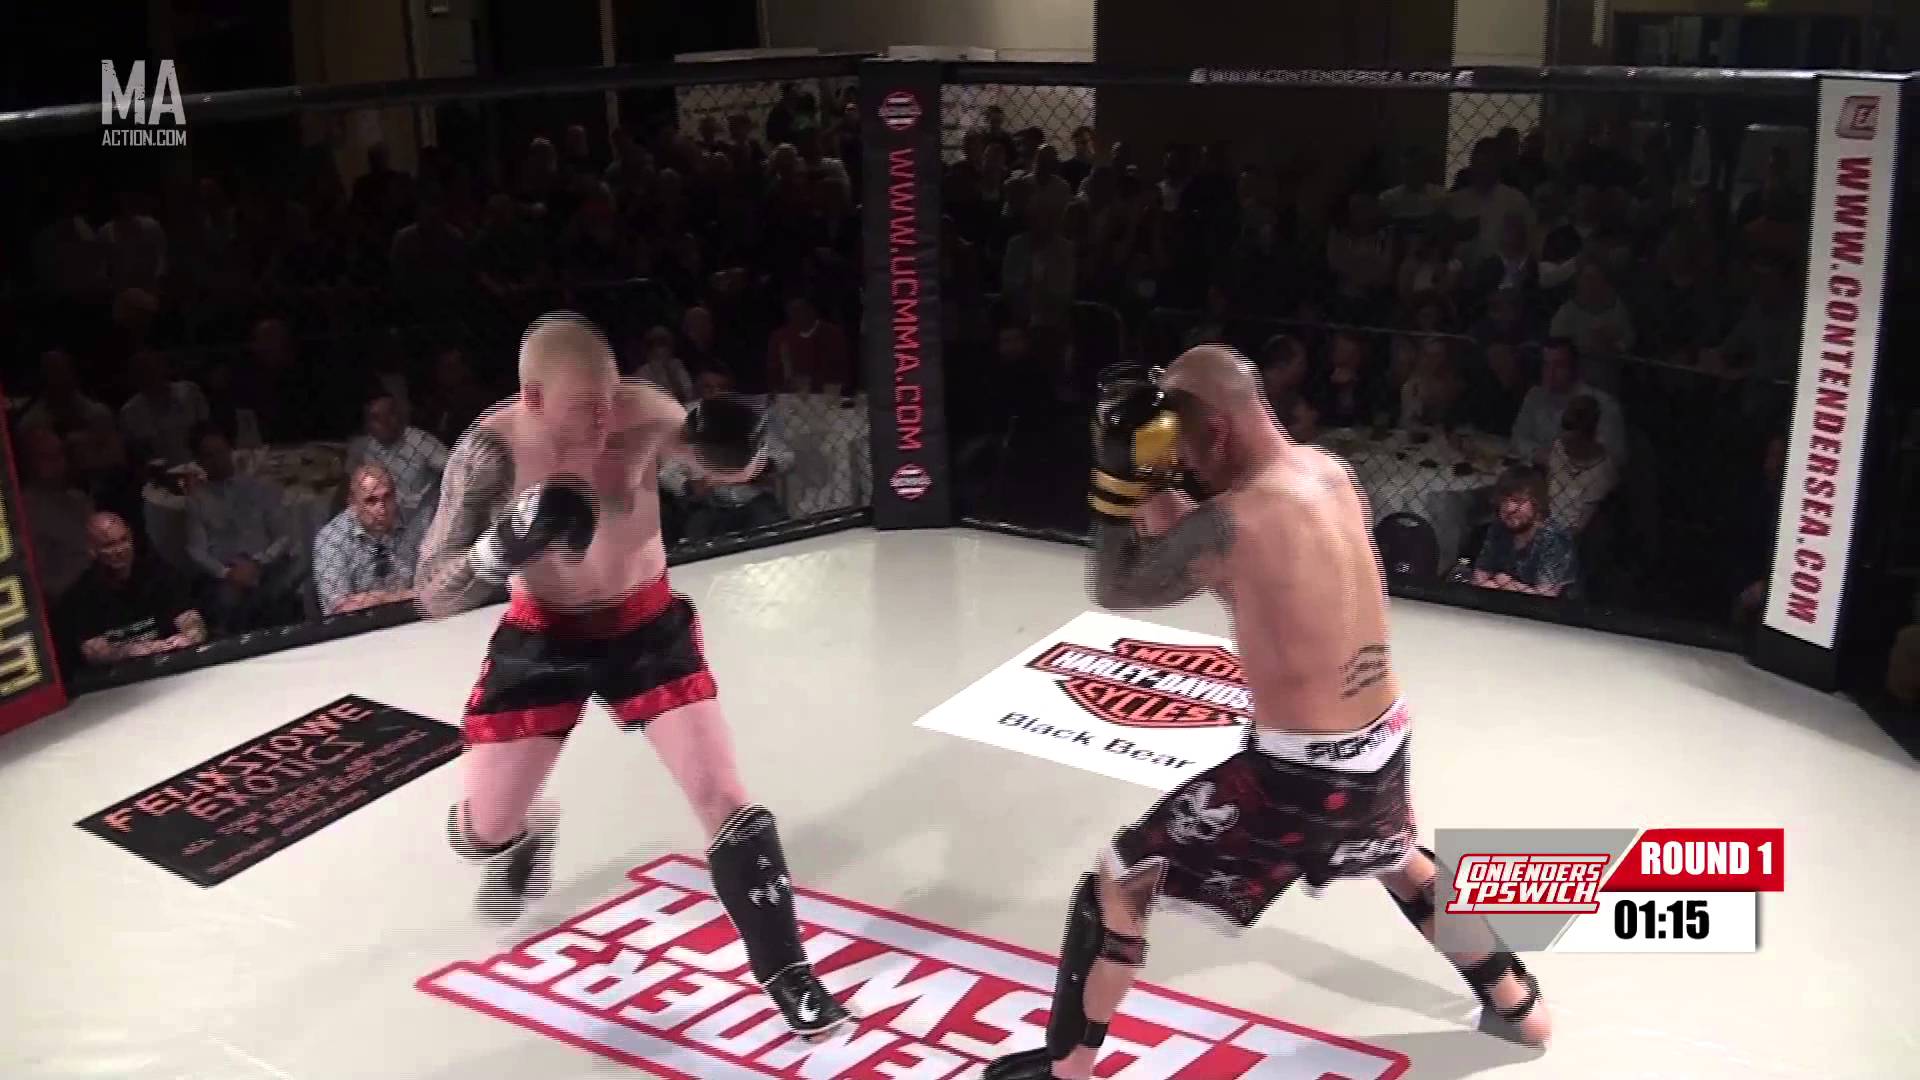 Tom Whitton vs Matt Bone - Contenders Ipswich #1 Full Fight MMA Video1920 x 1080